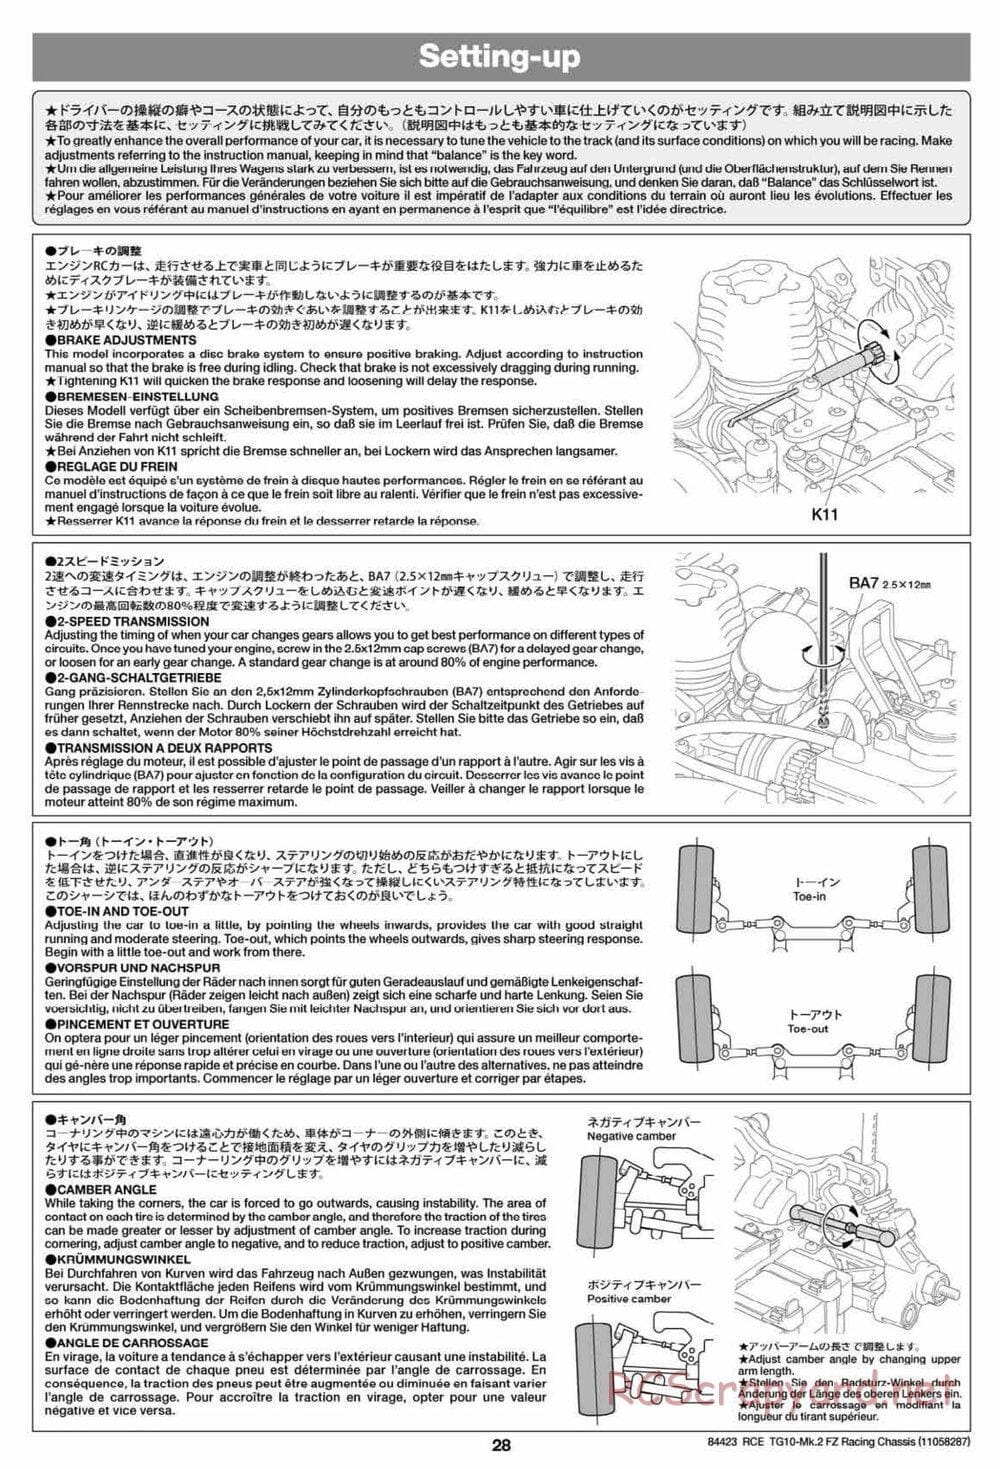 Tamiya - TG10 Mk.2 FZ Racing Chassis - Manual - Page 28